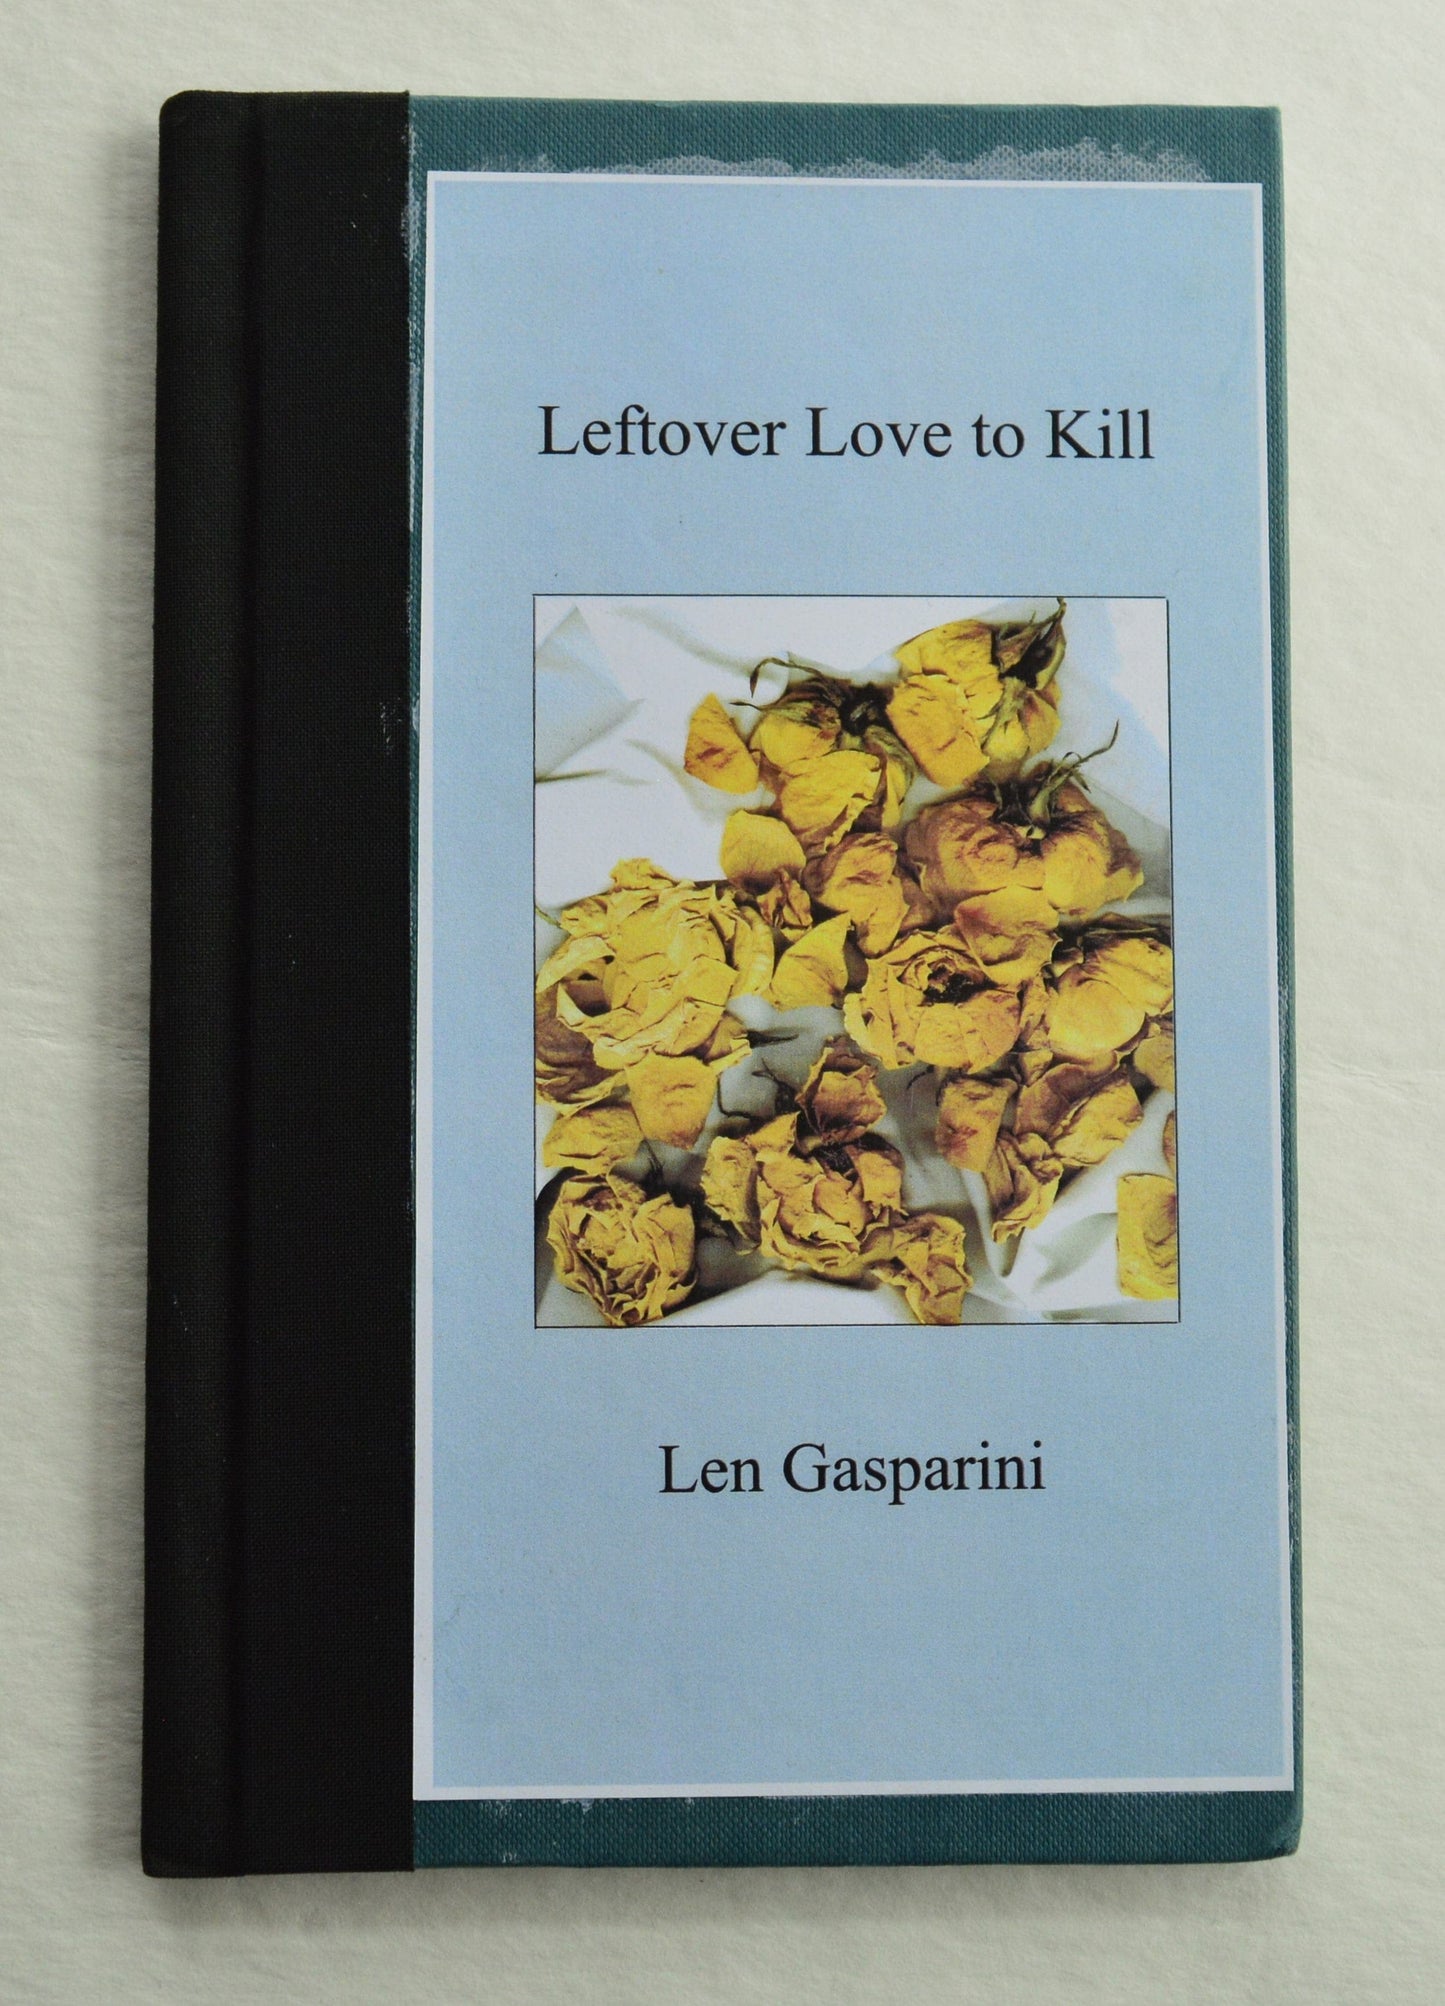 Leftover Love to Kill - Len Gasparini